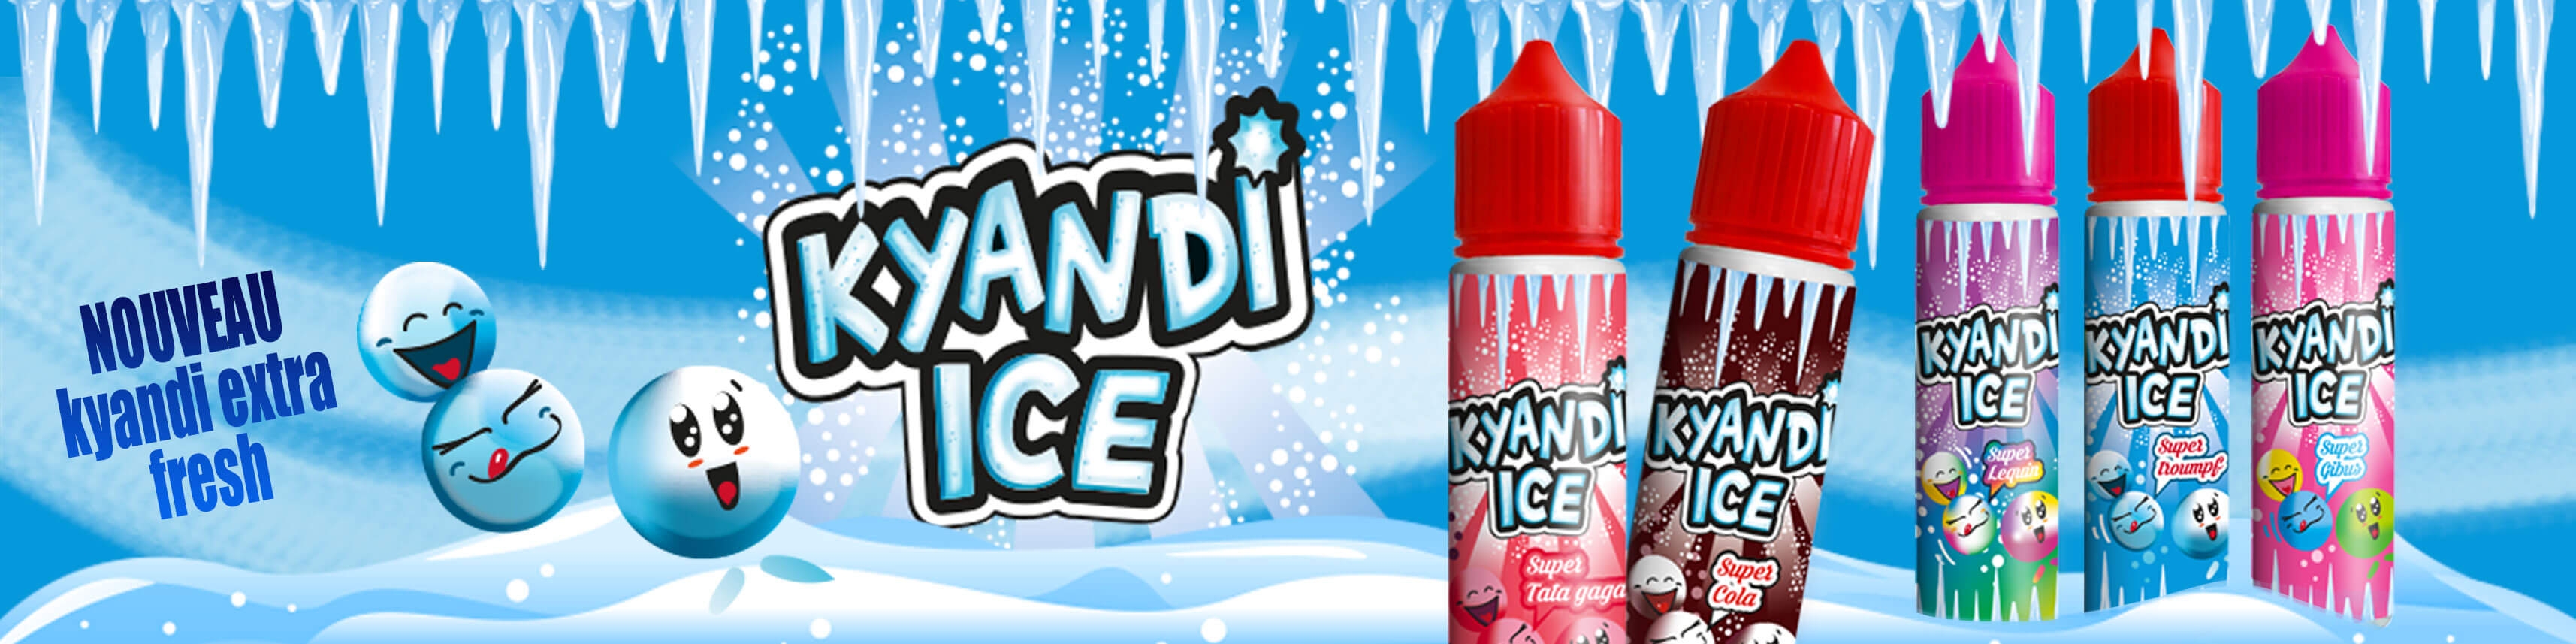 SLIDE-Kyandi-ICE